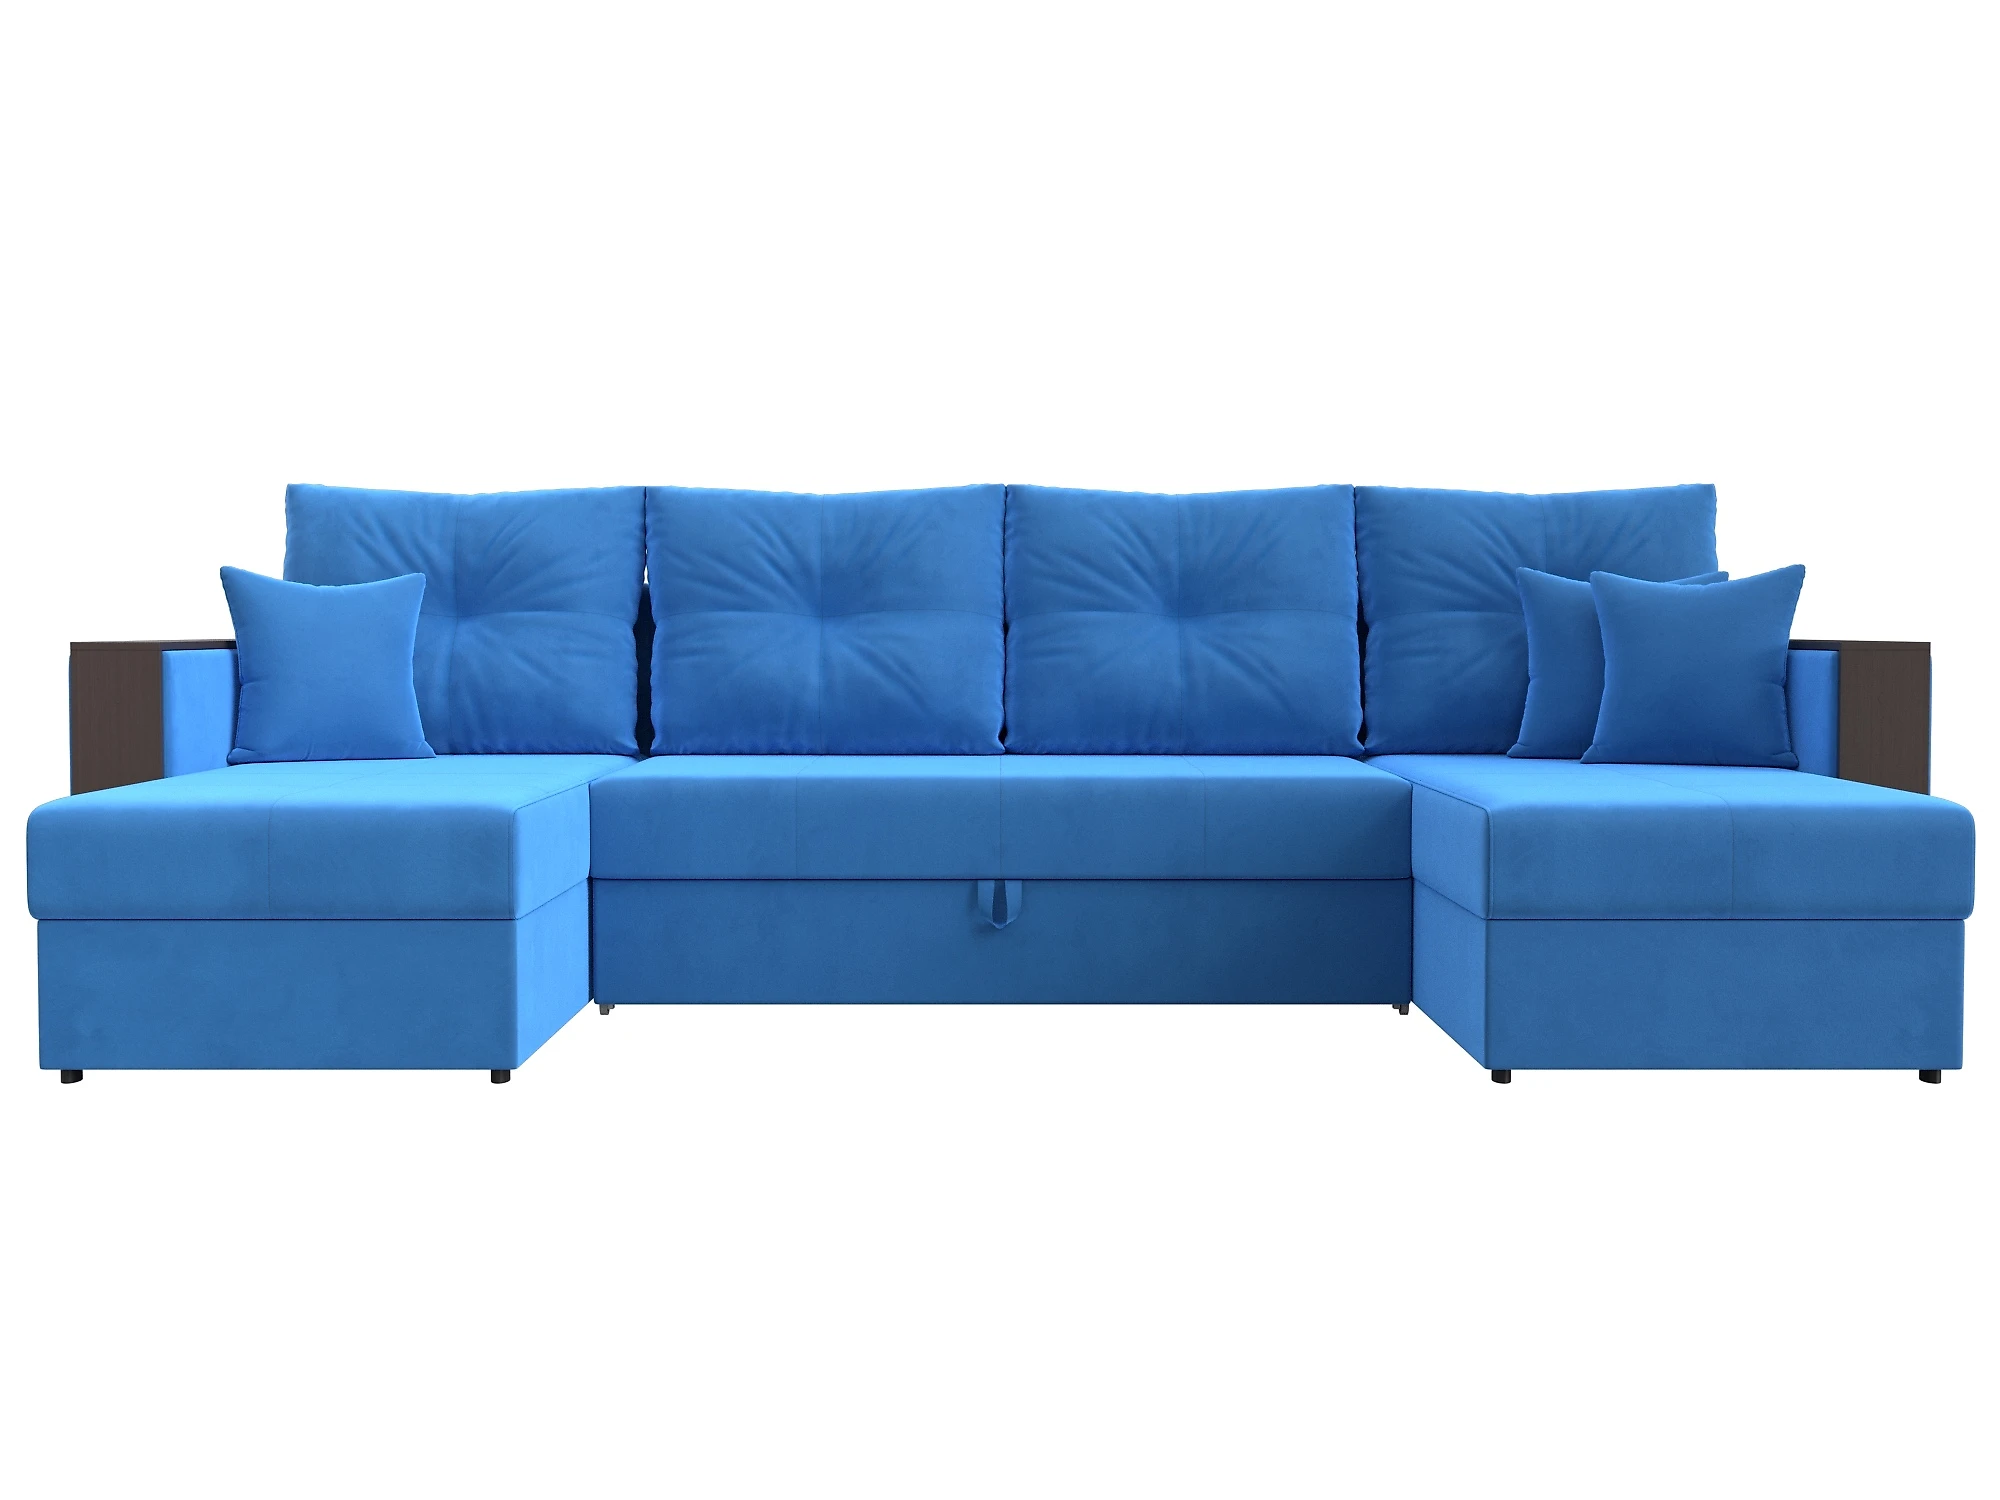  голубой диван  Валенсия-П Плюш Дизайн 3